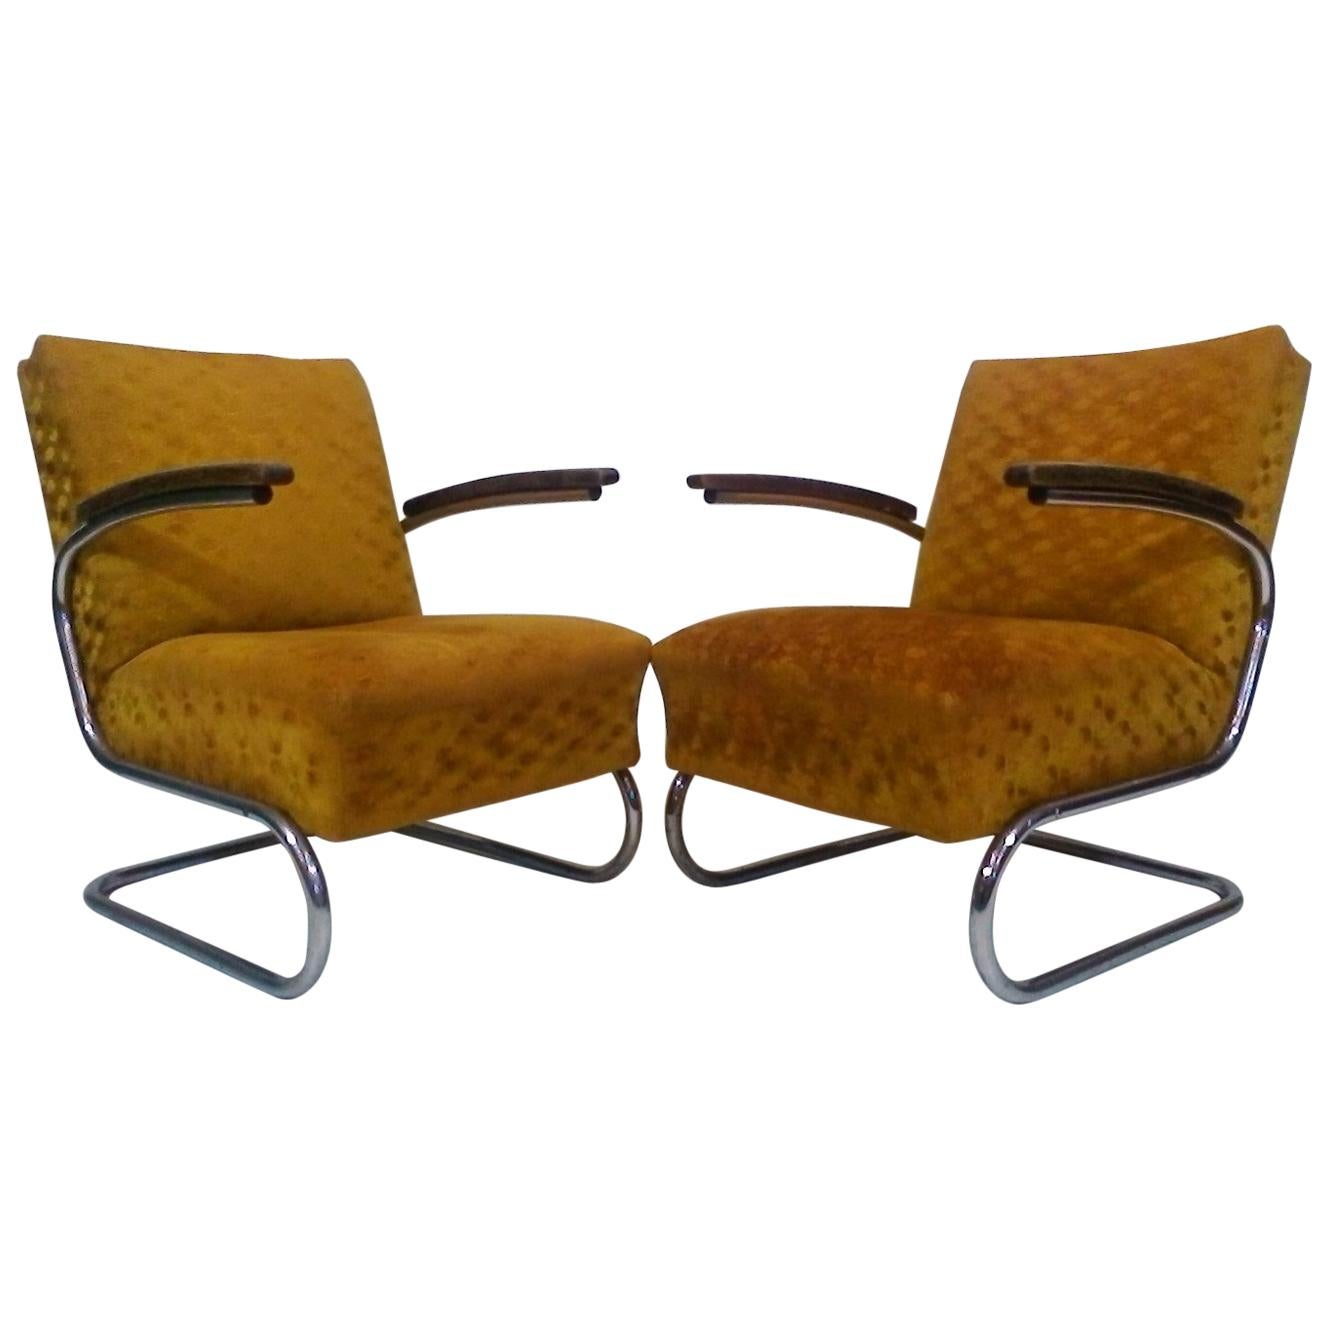 Set of two armchairs by Jindřich Halabala, Bauhaus - Műcke & Meider, 1930s